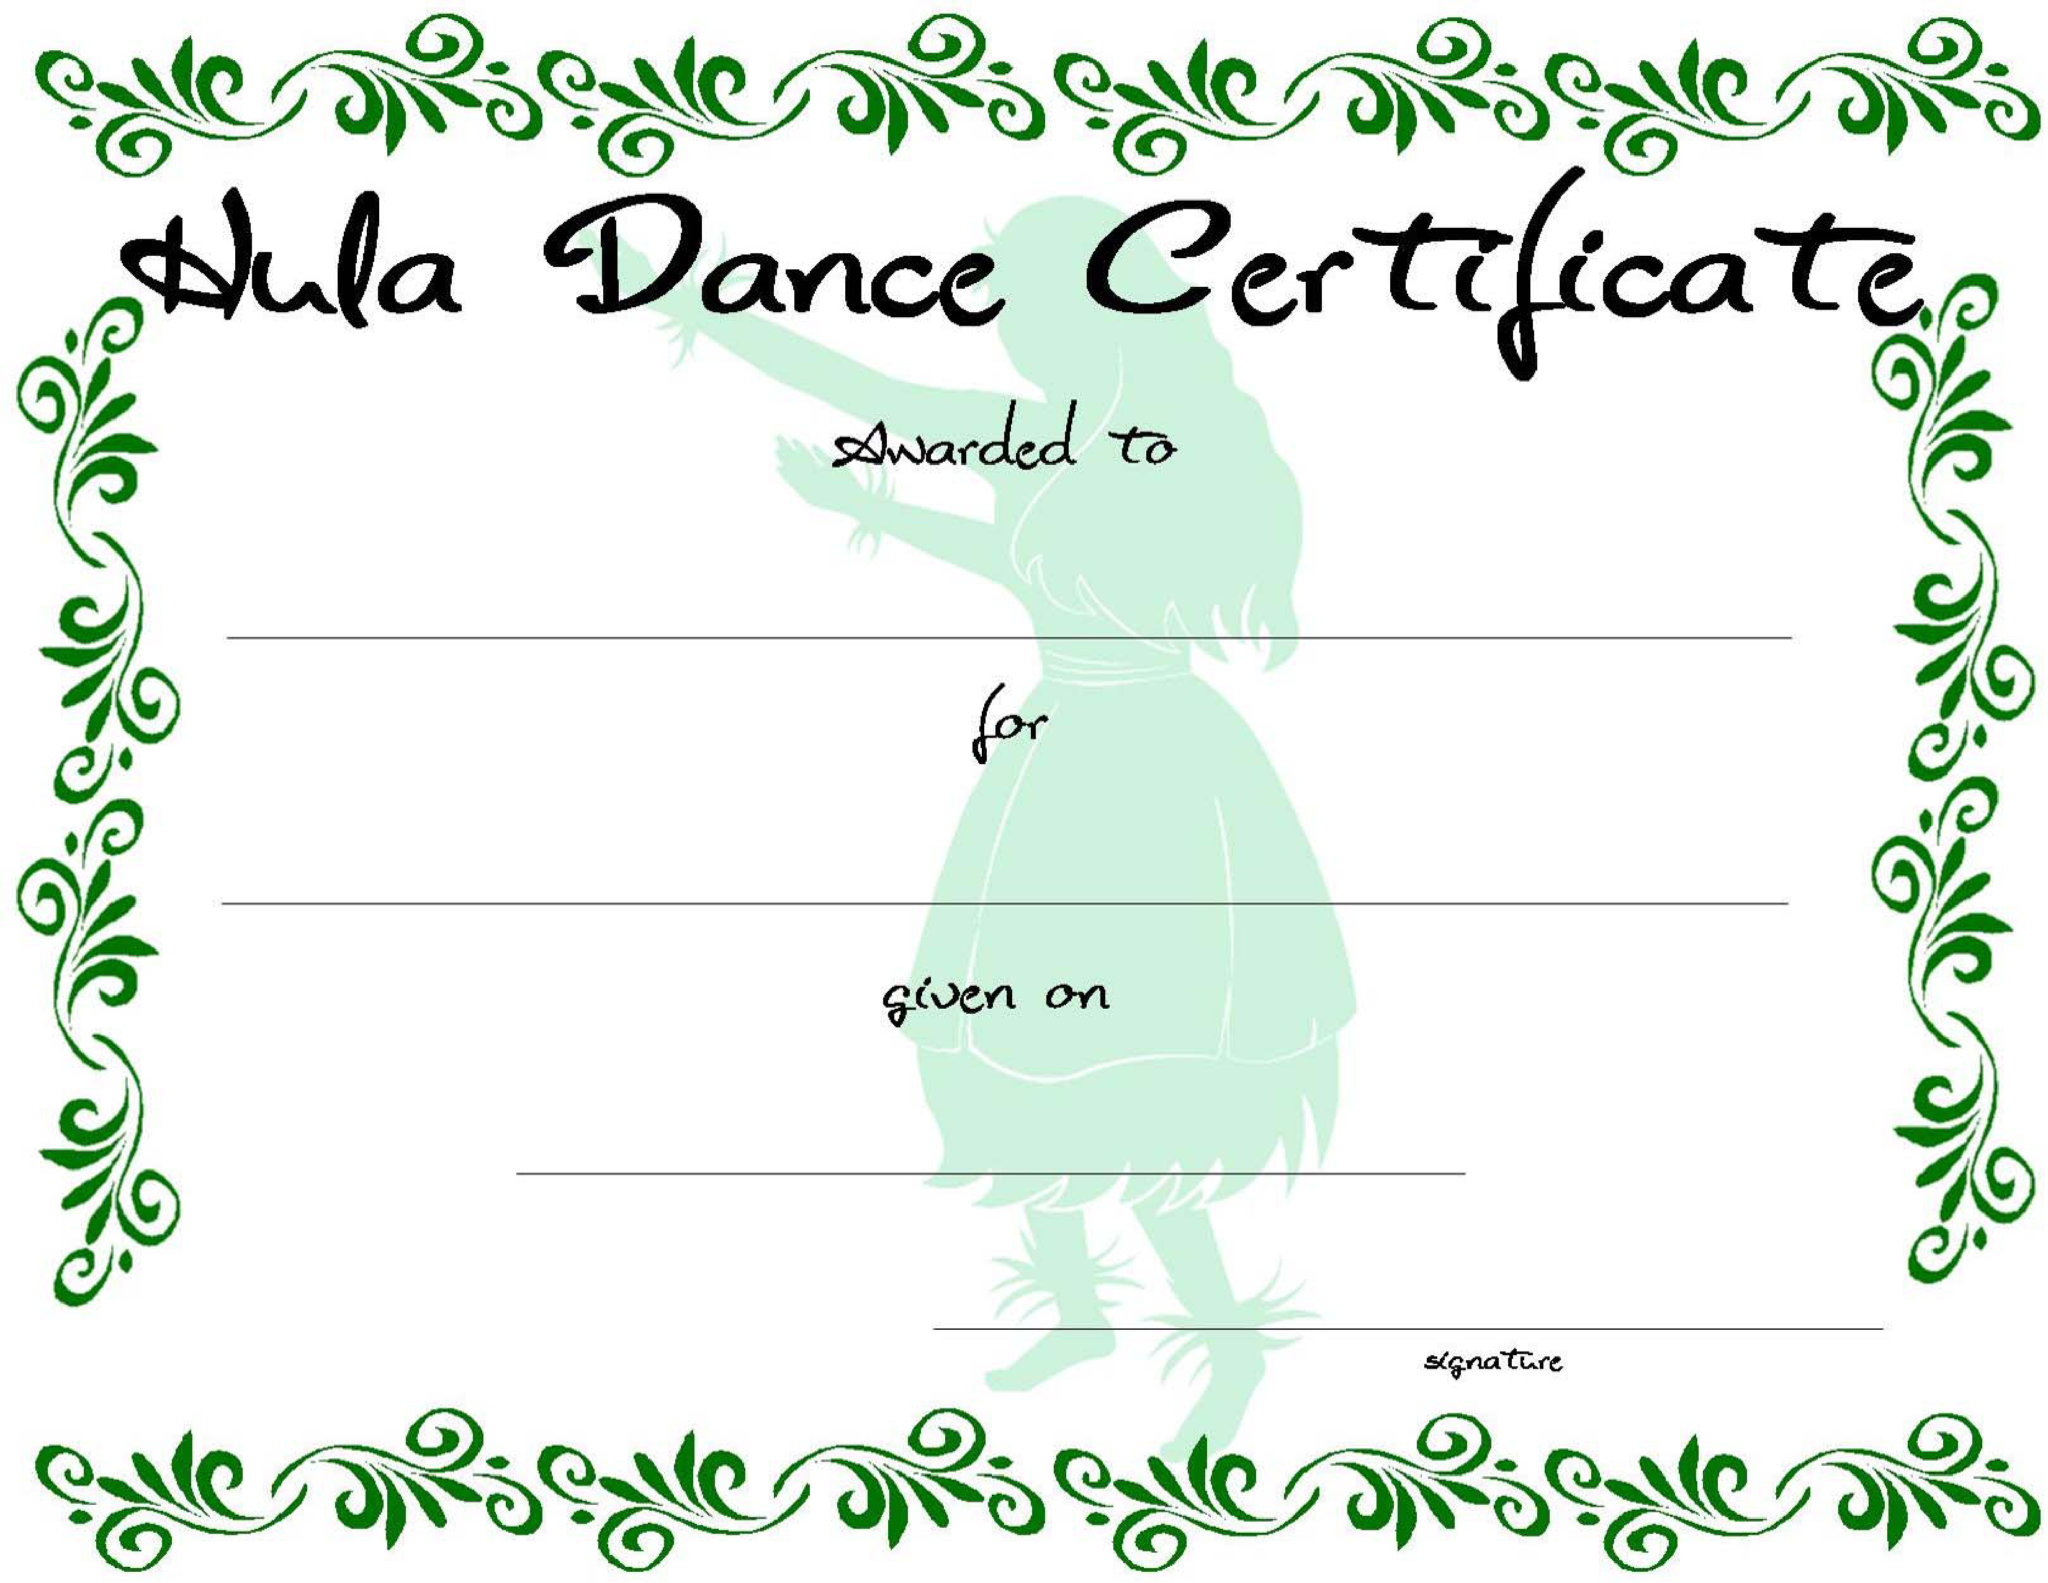 Dance Certificate Templates At Allbusinesstemplates regarding Dance